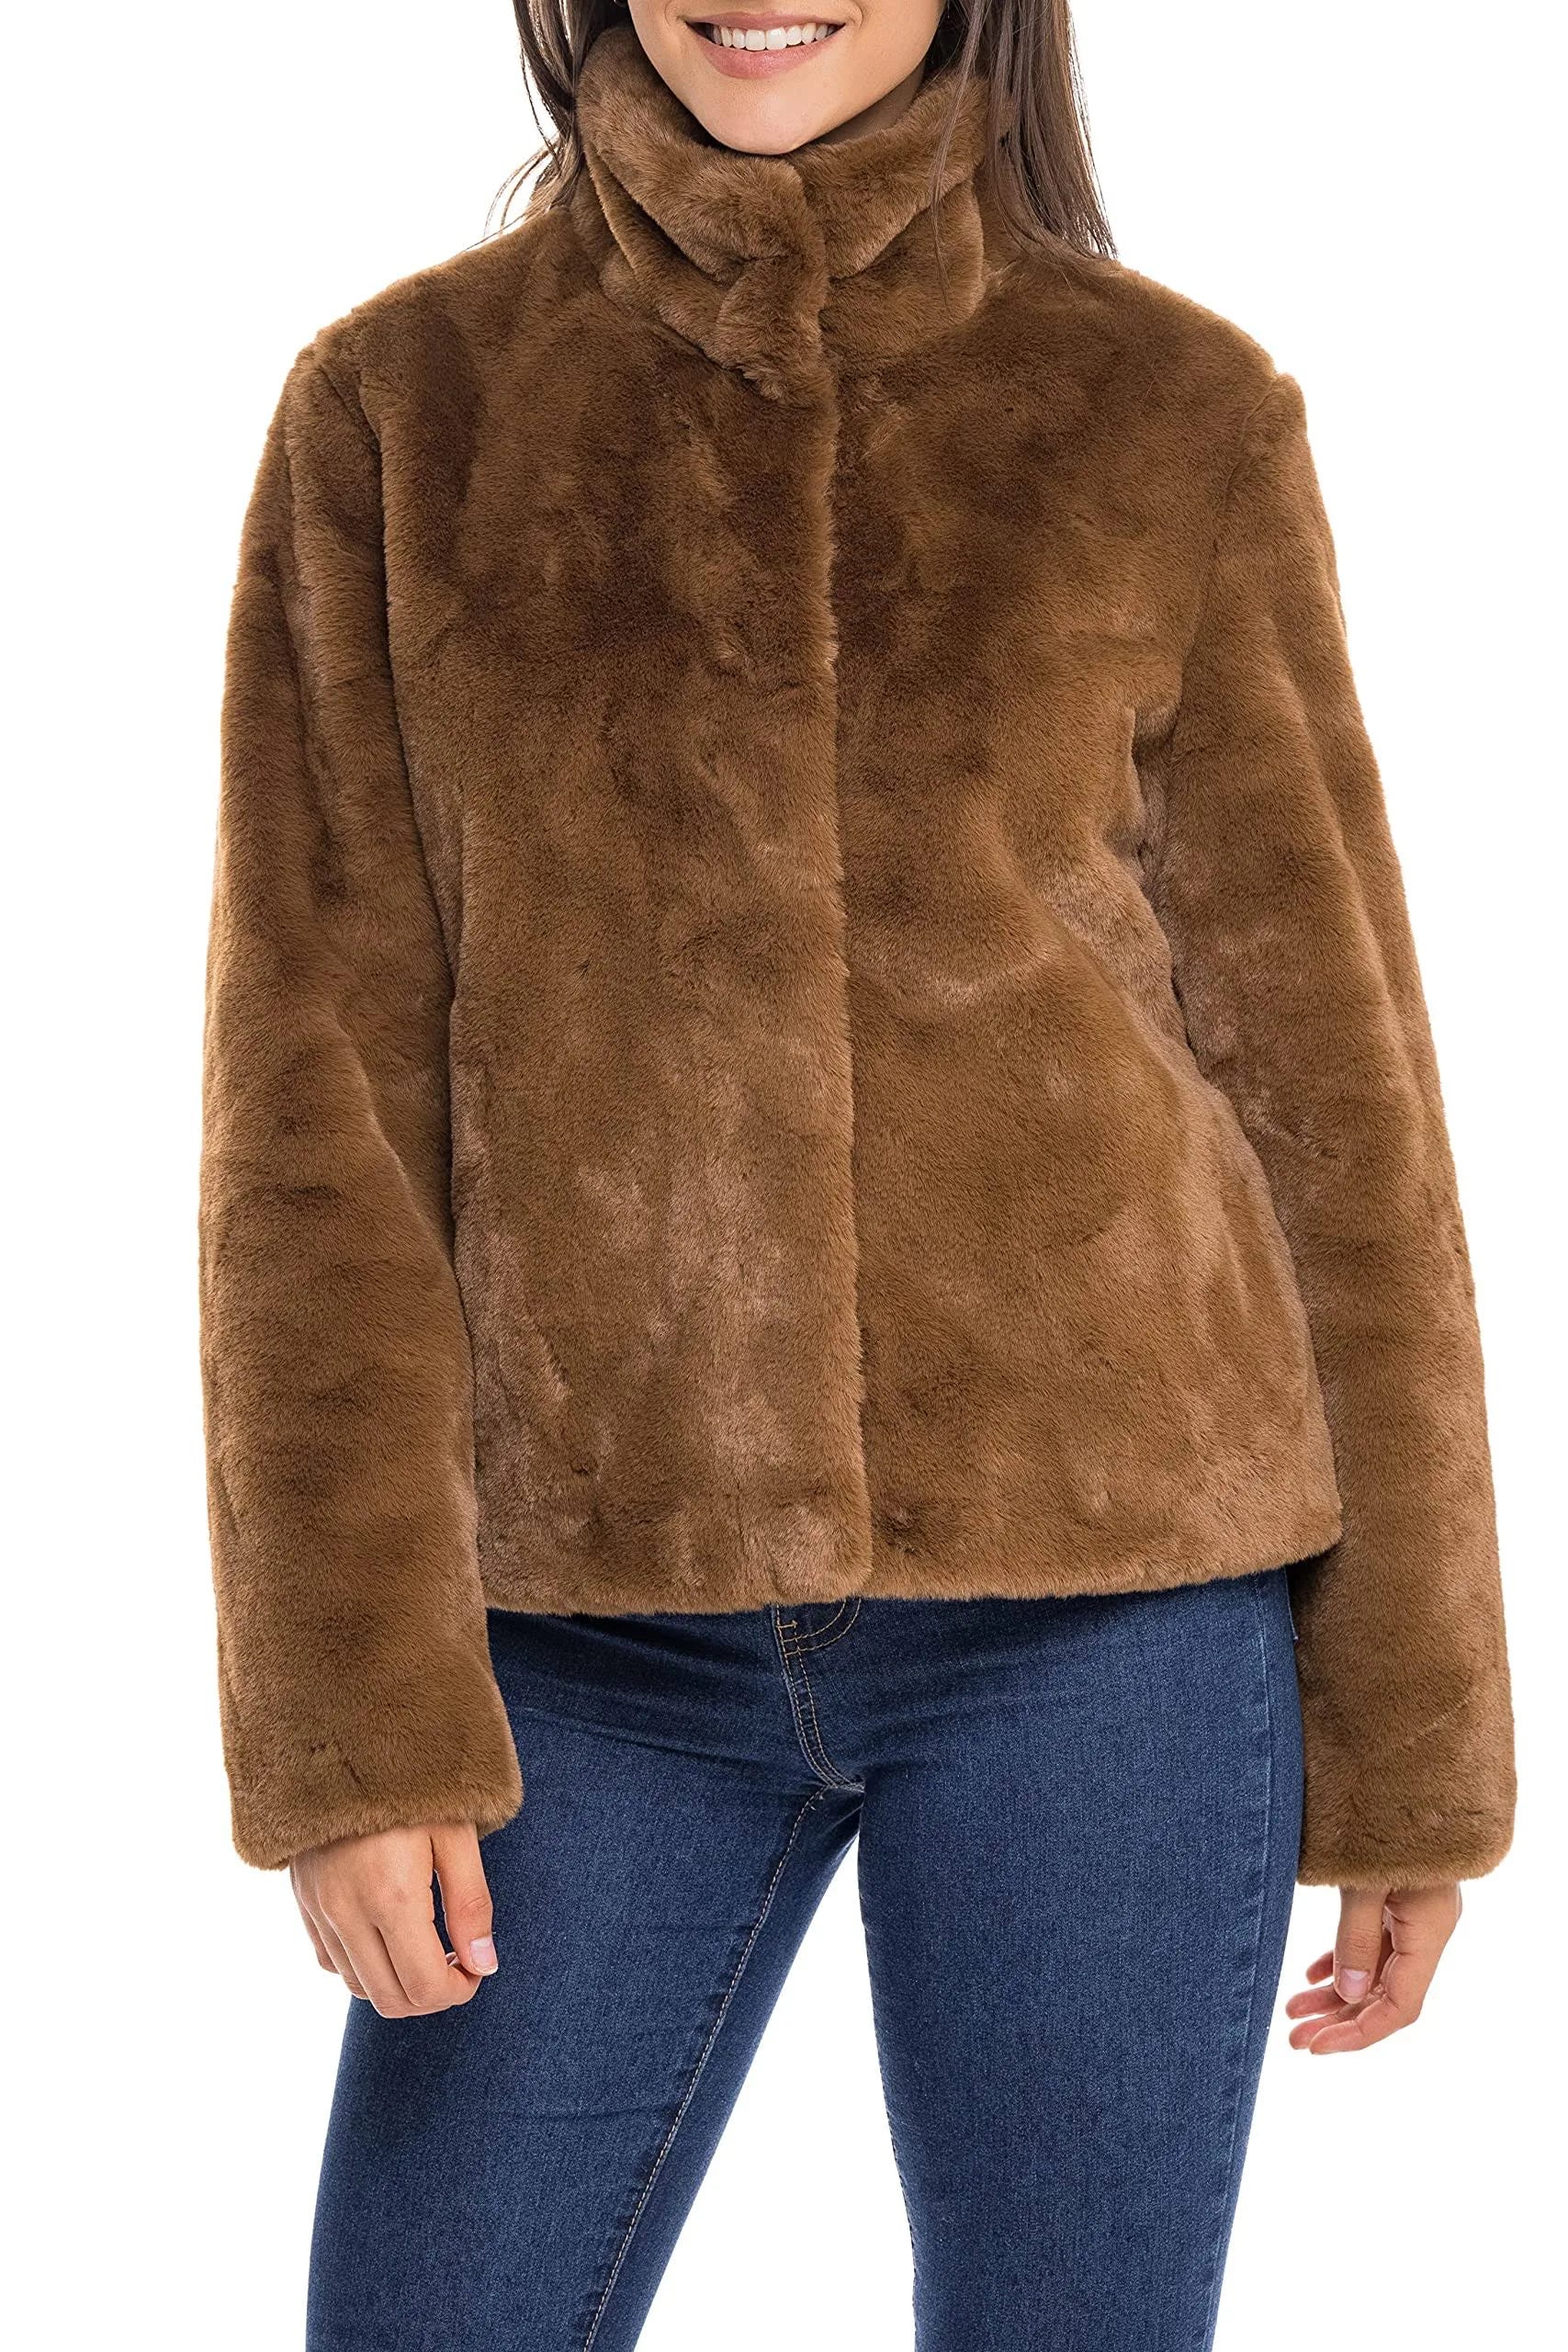 Soft and Stylish Faux Fur Women's Jacket | Image